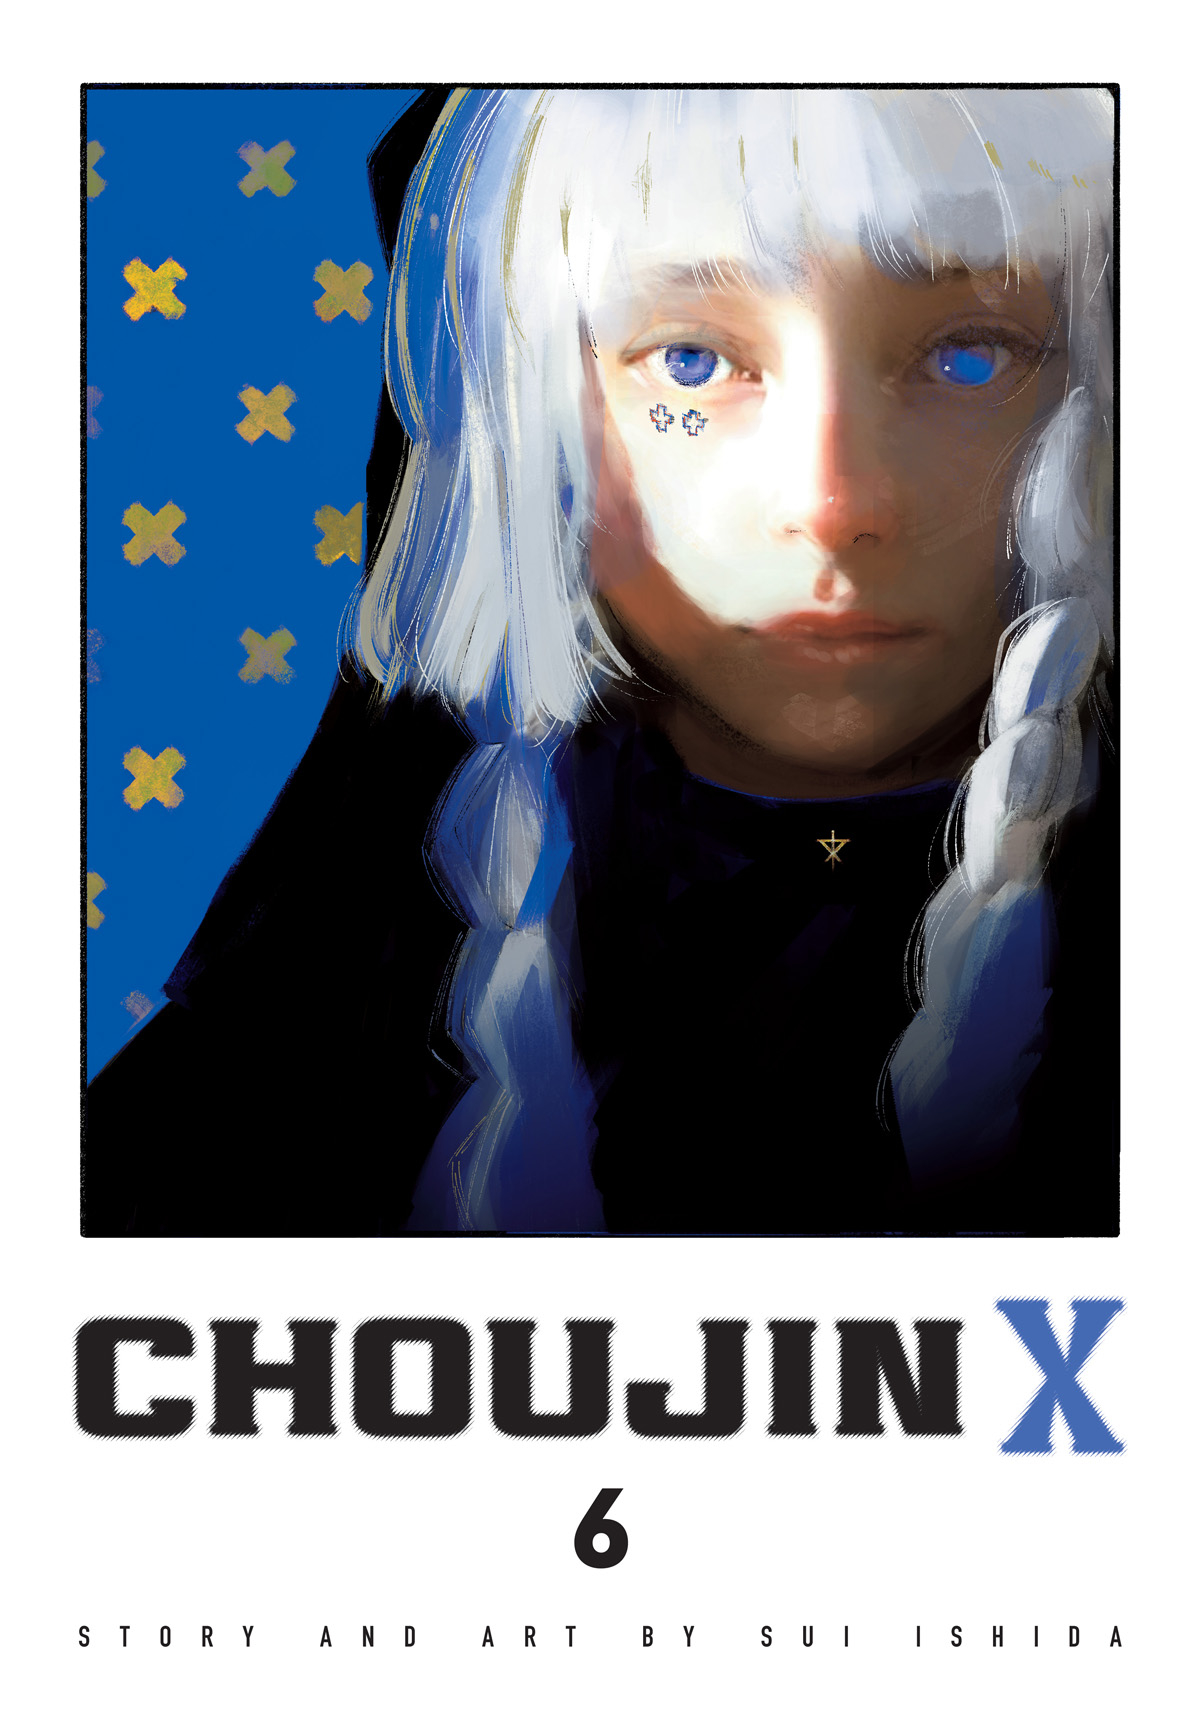 Choujin X Manga Volume 6